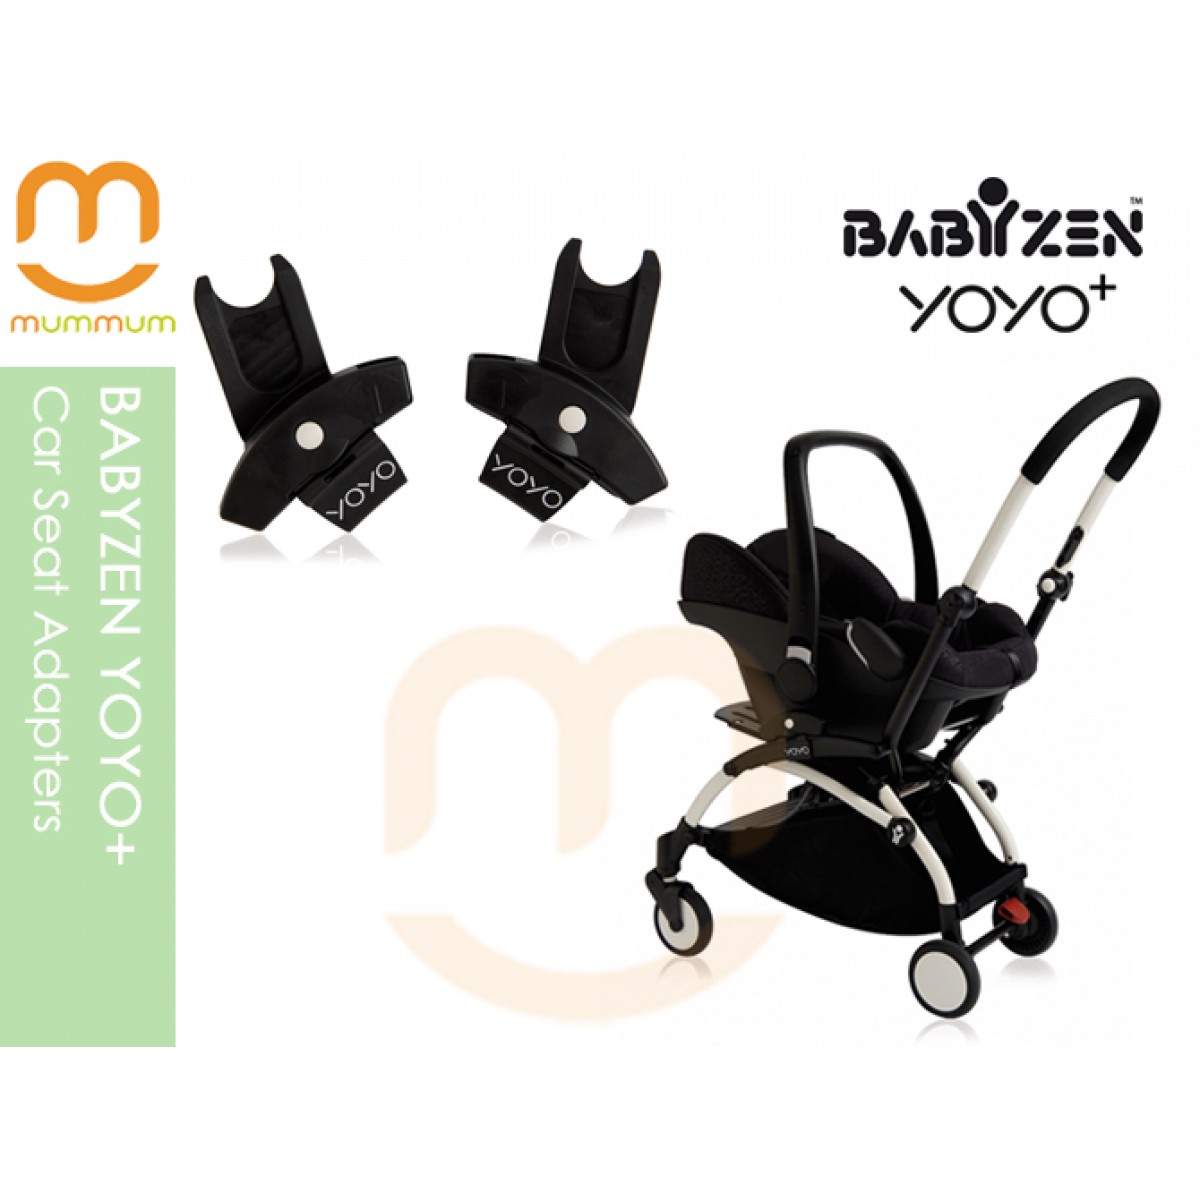 babyzen yoyo car seat adapter maxi cosi